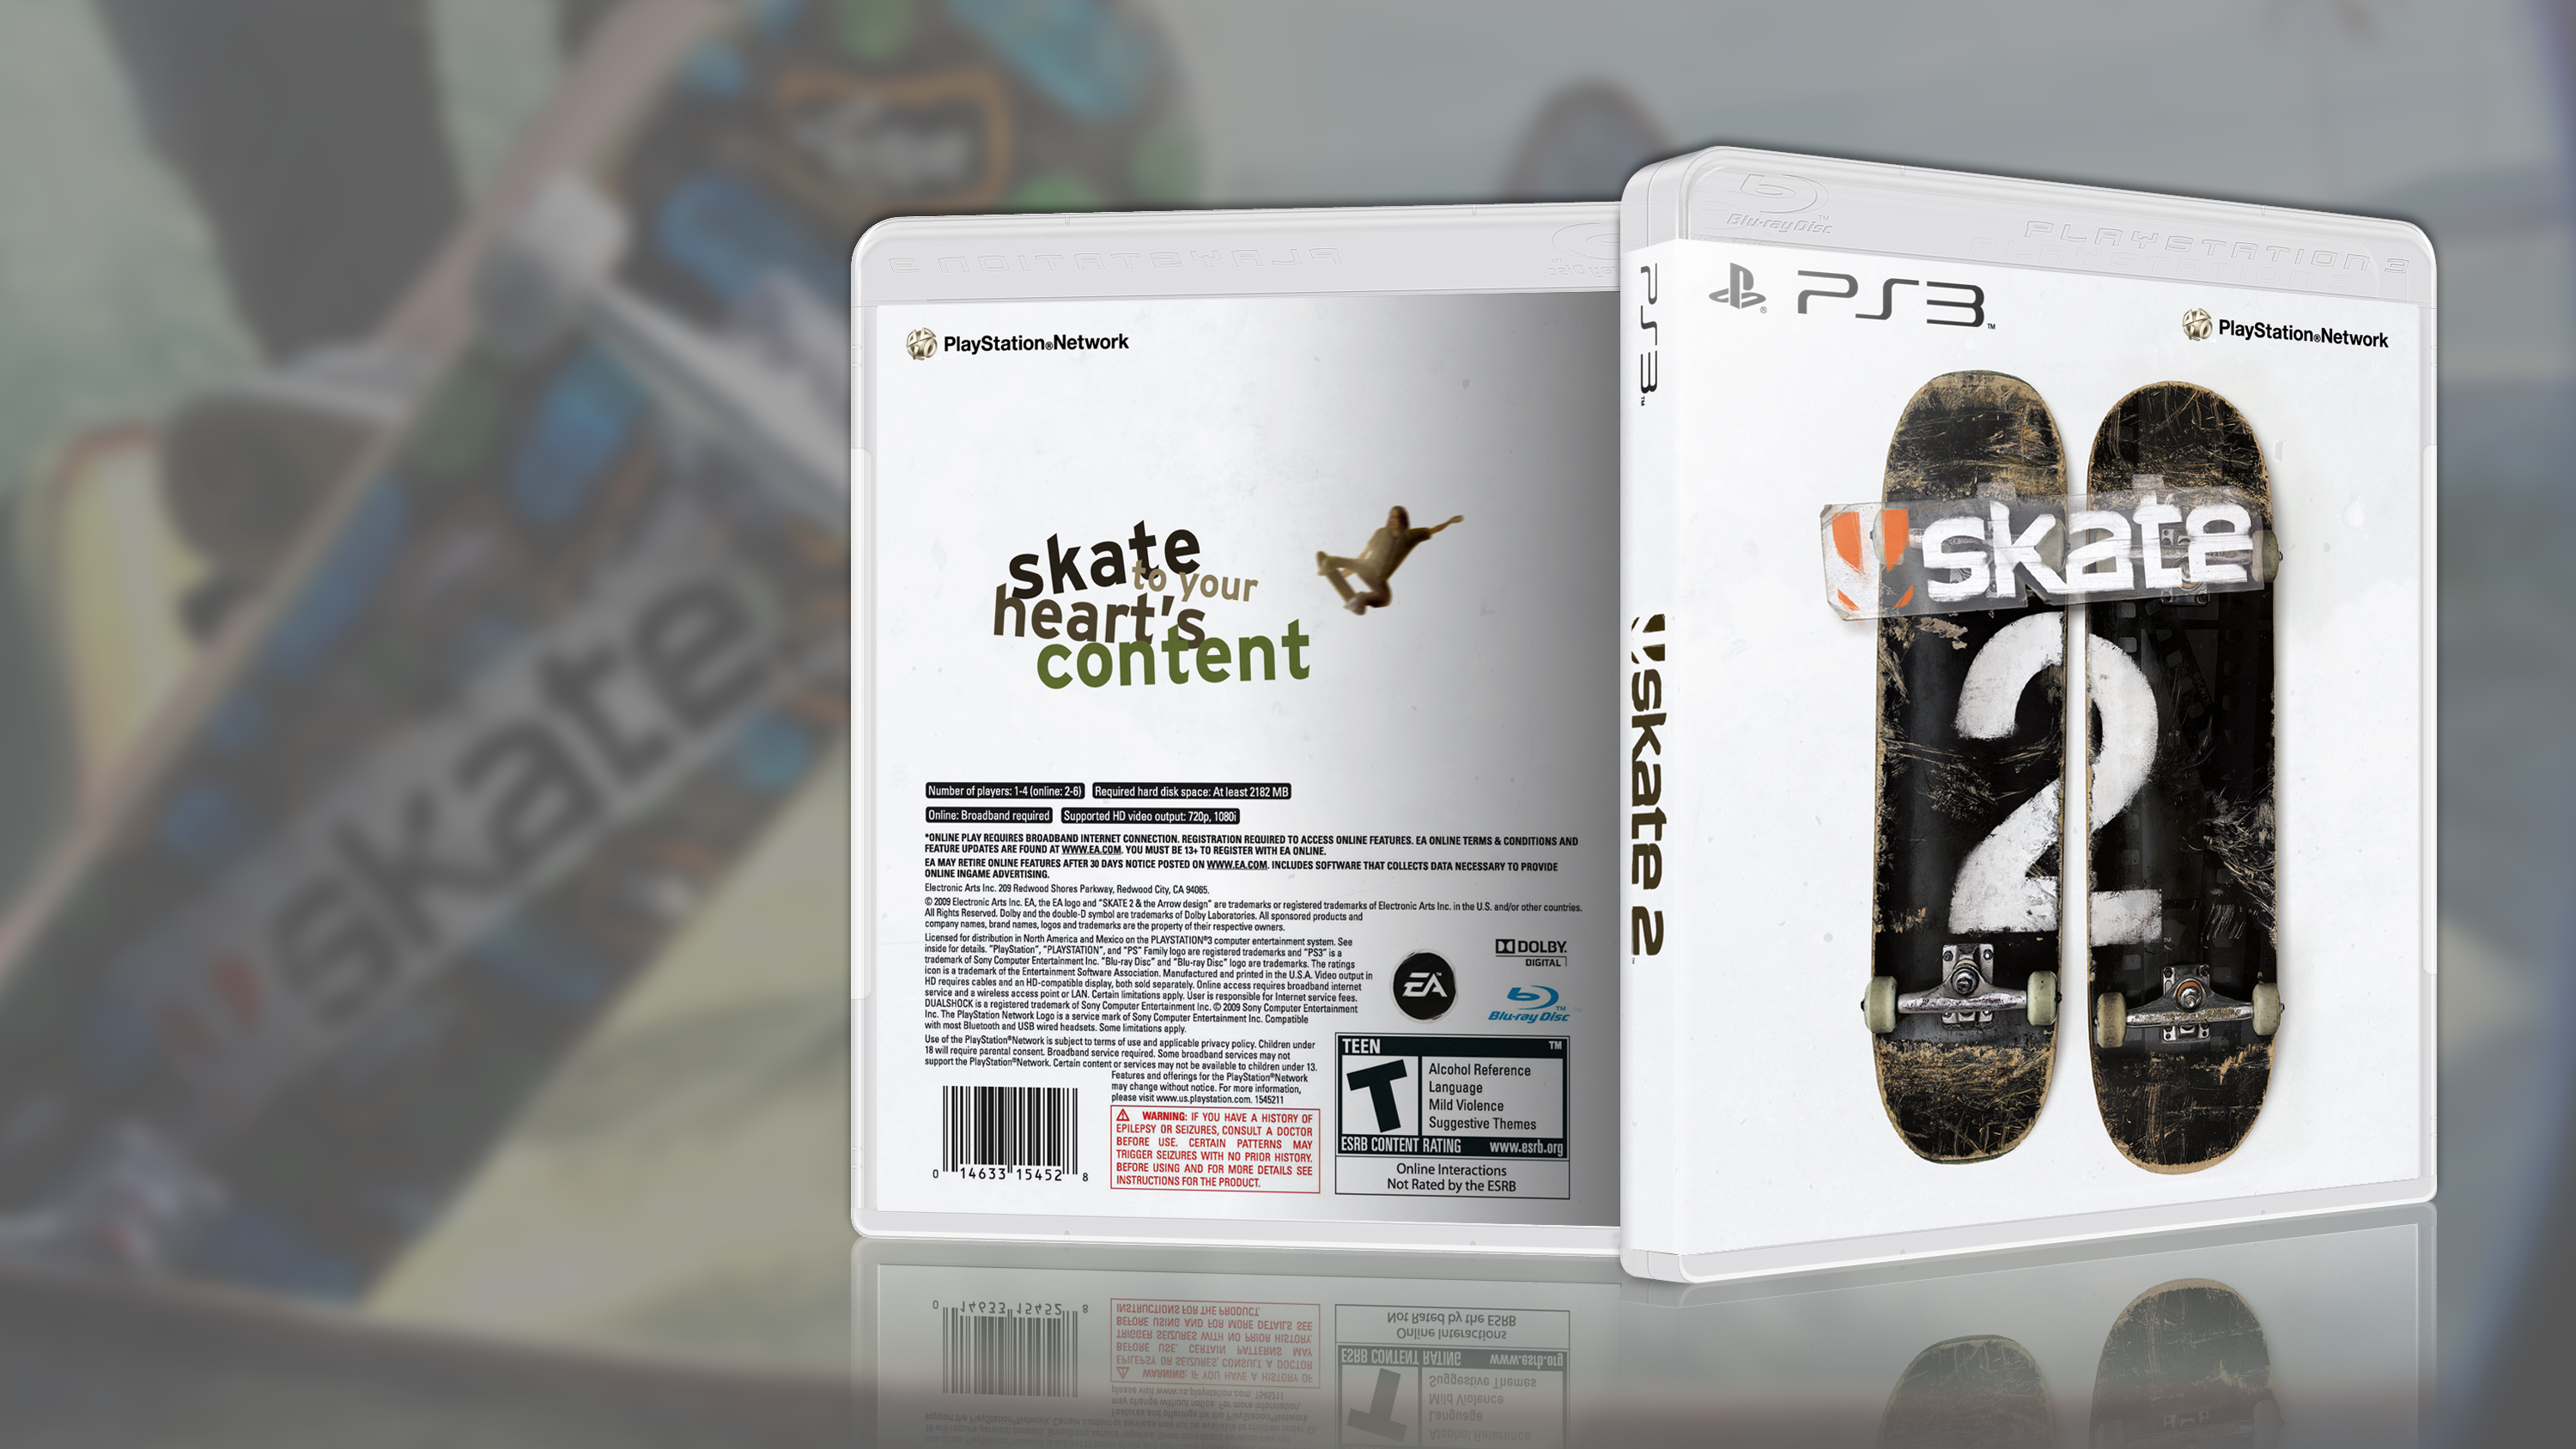 Skate 2 box cover